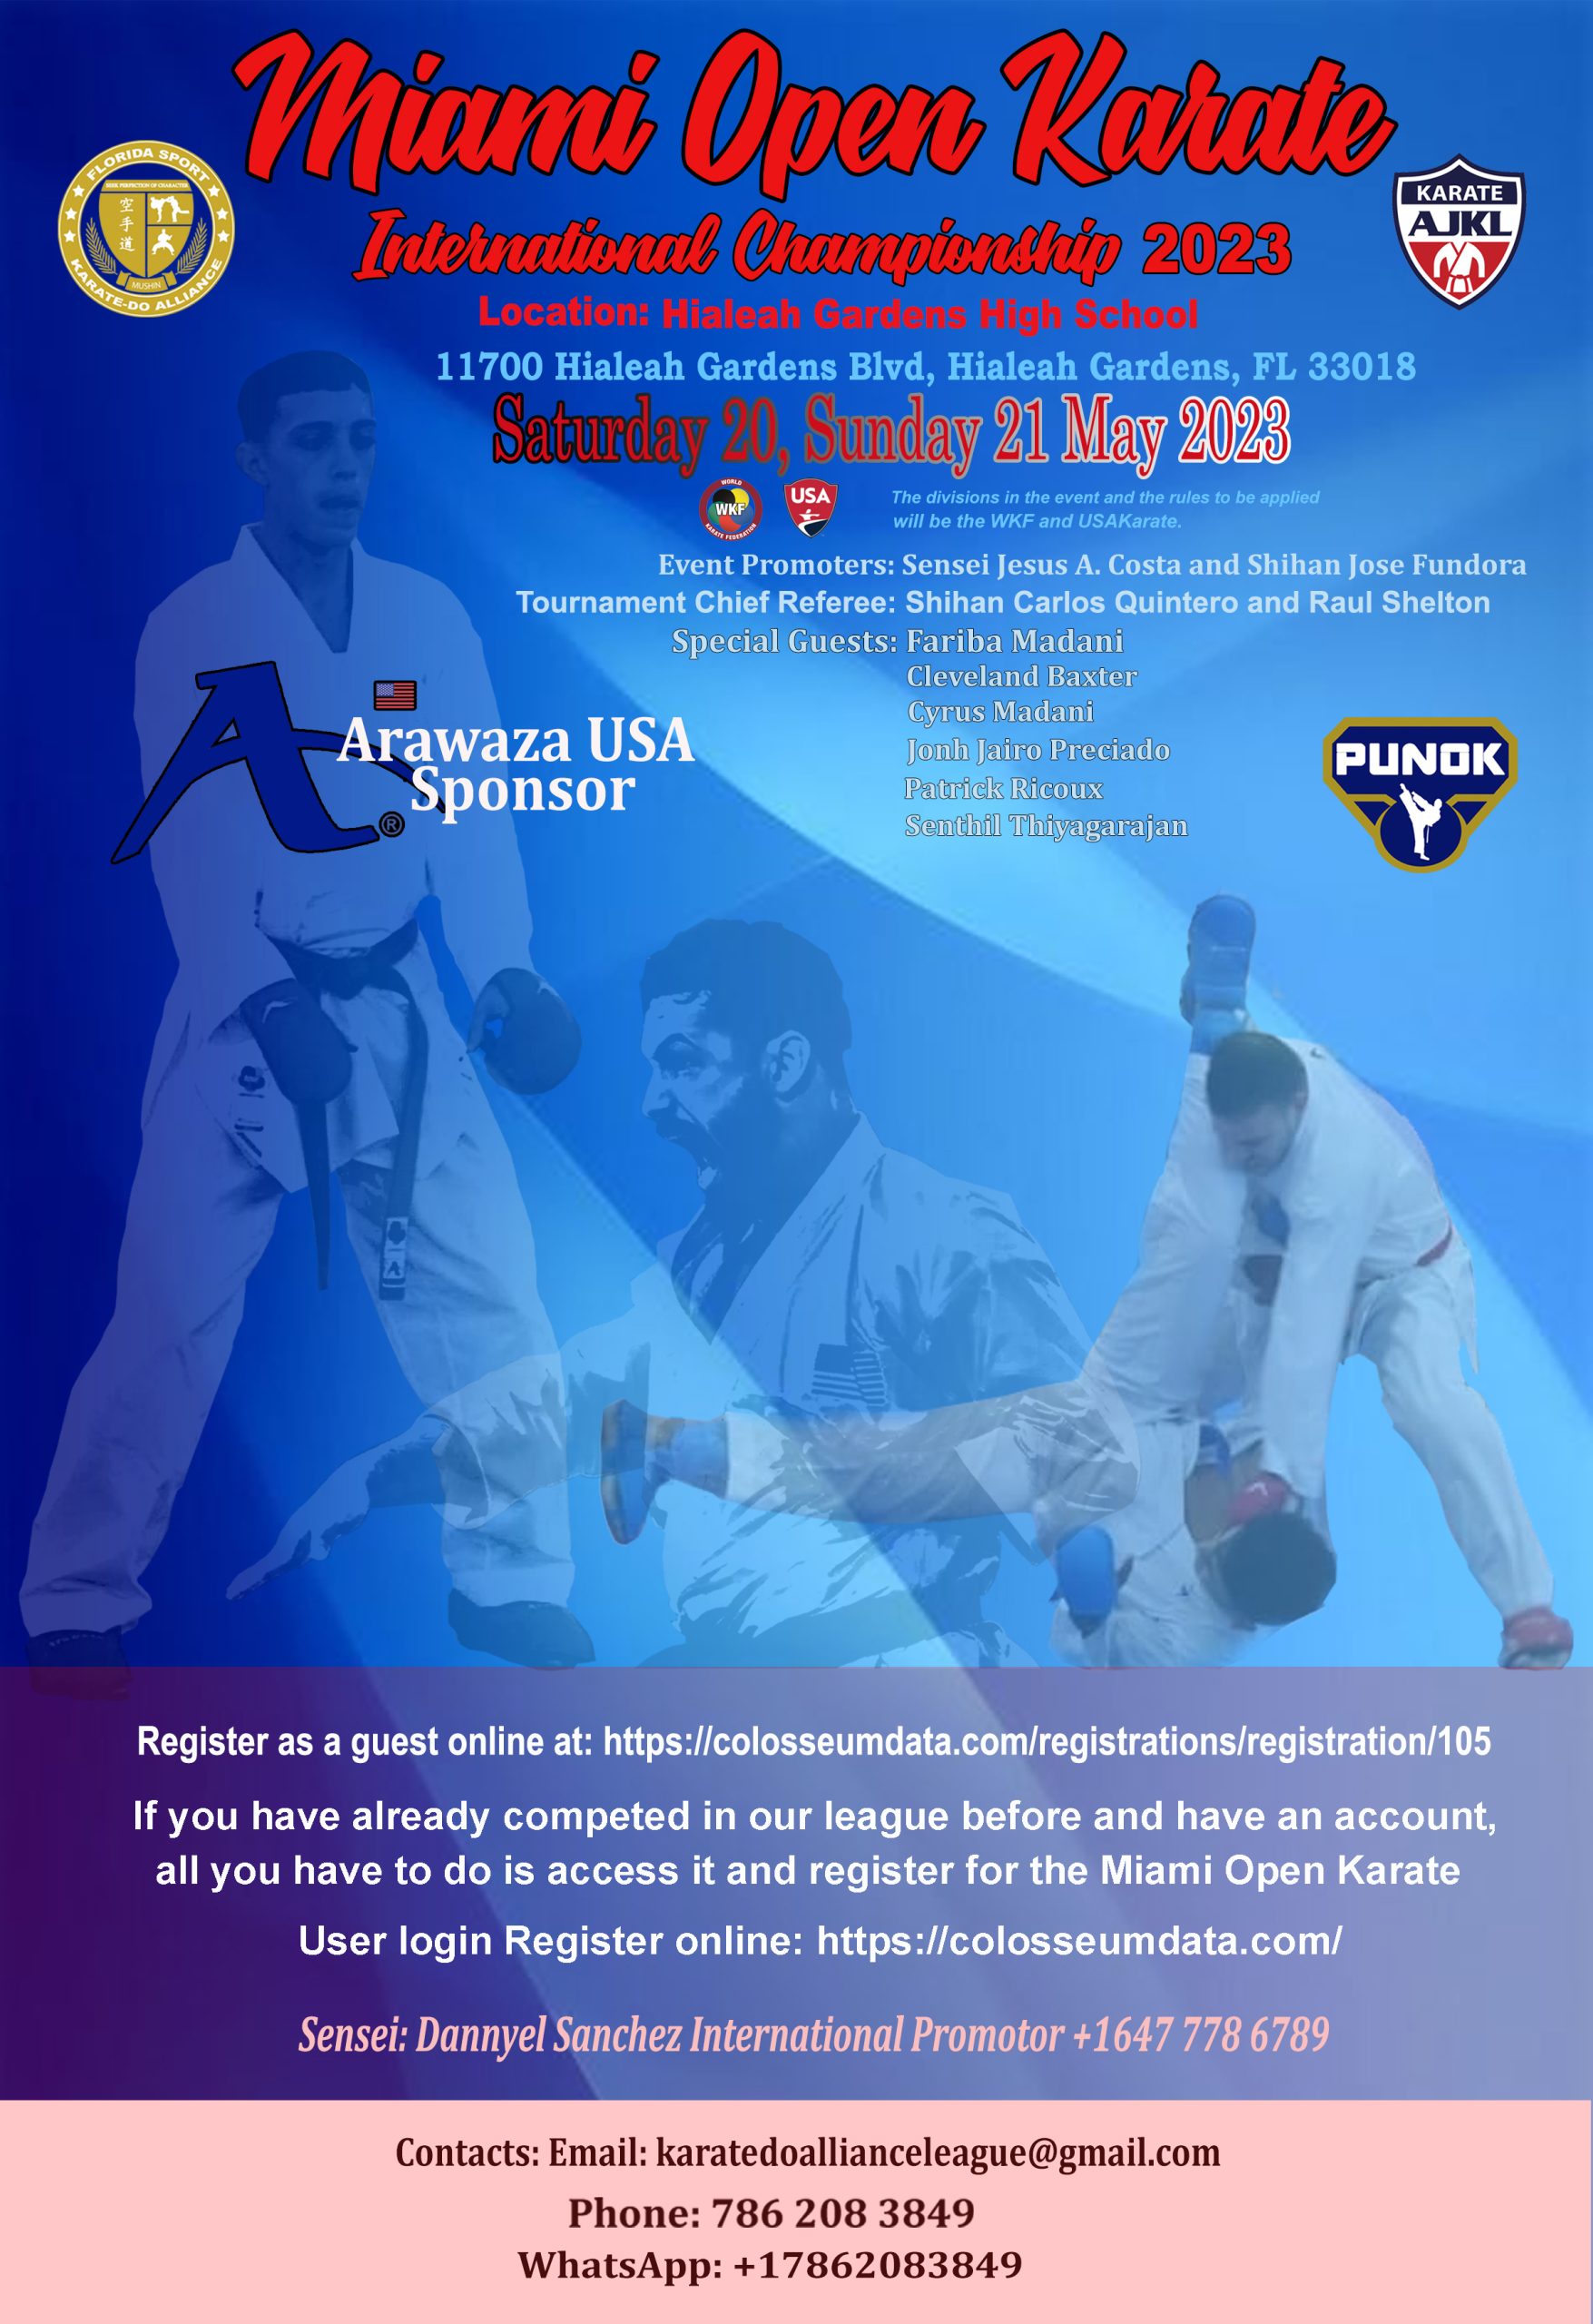 Miami Open Karate Championship May 2021, 2023 Miami Open Karate